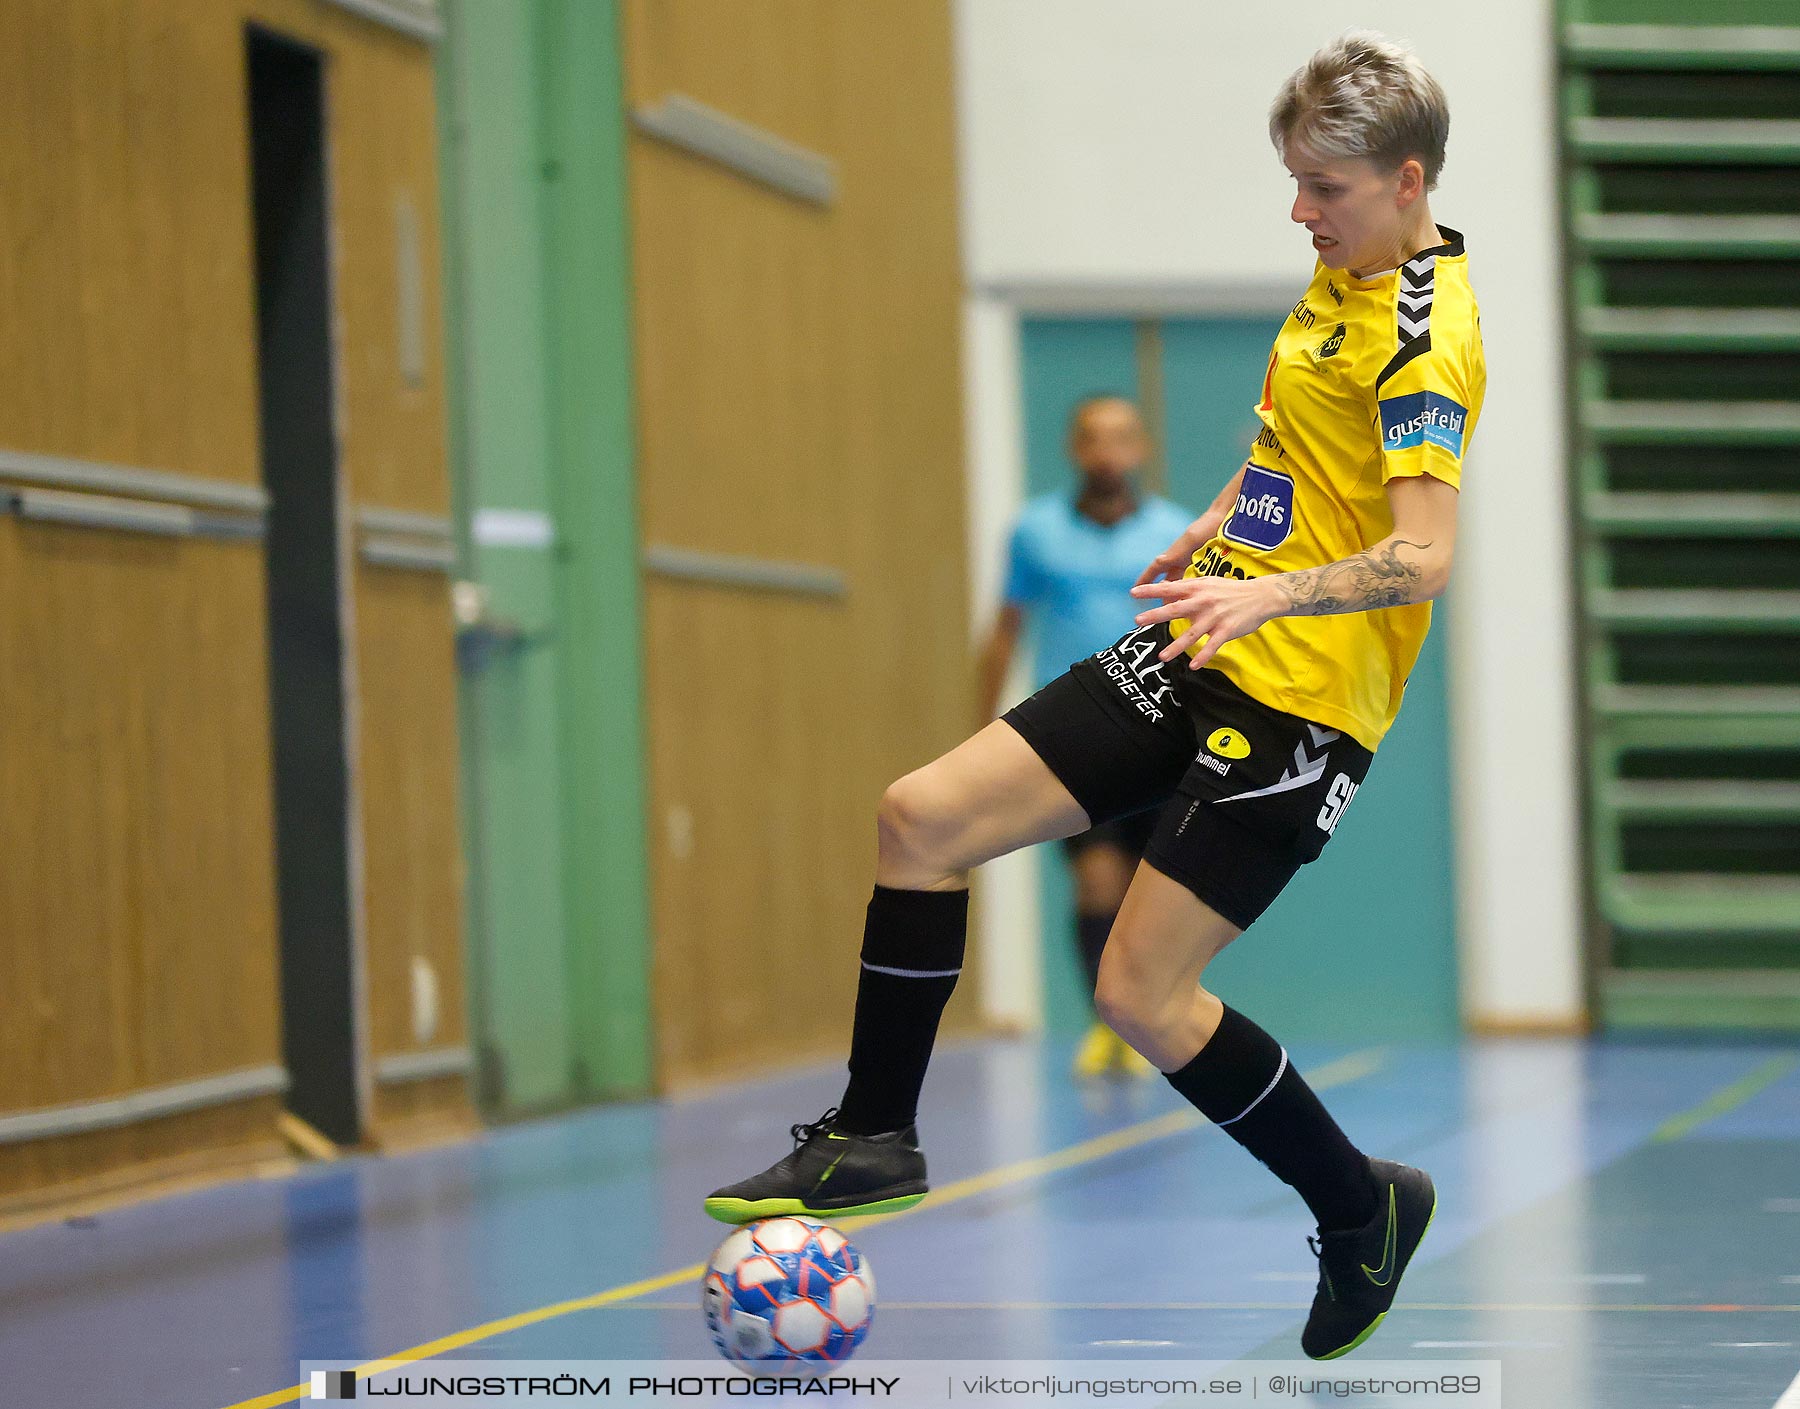 Skövde Futsalcup 2021 Damer Våmbs IF-Skultorps IF 2,dam,Arena Skövde,Skövde,Sverige,Futsal,,2021,271096